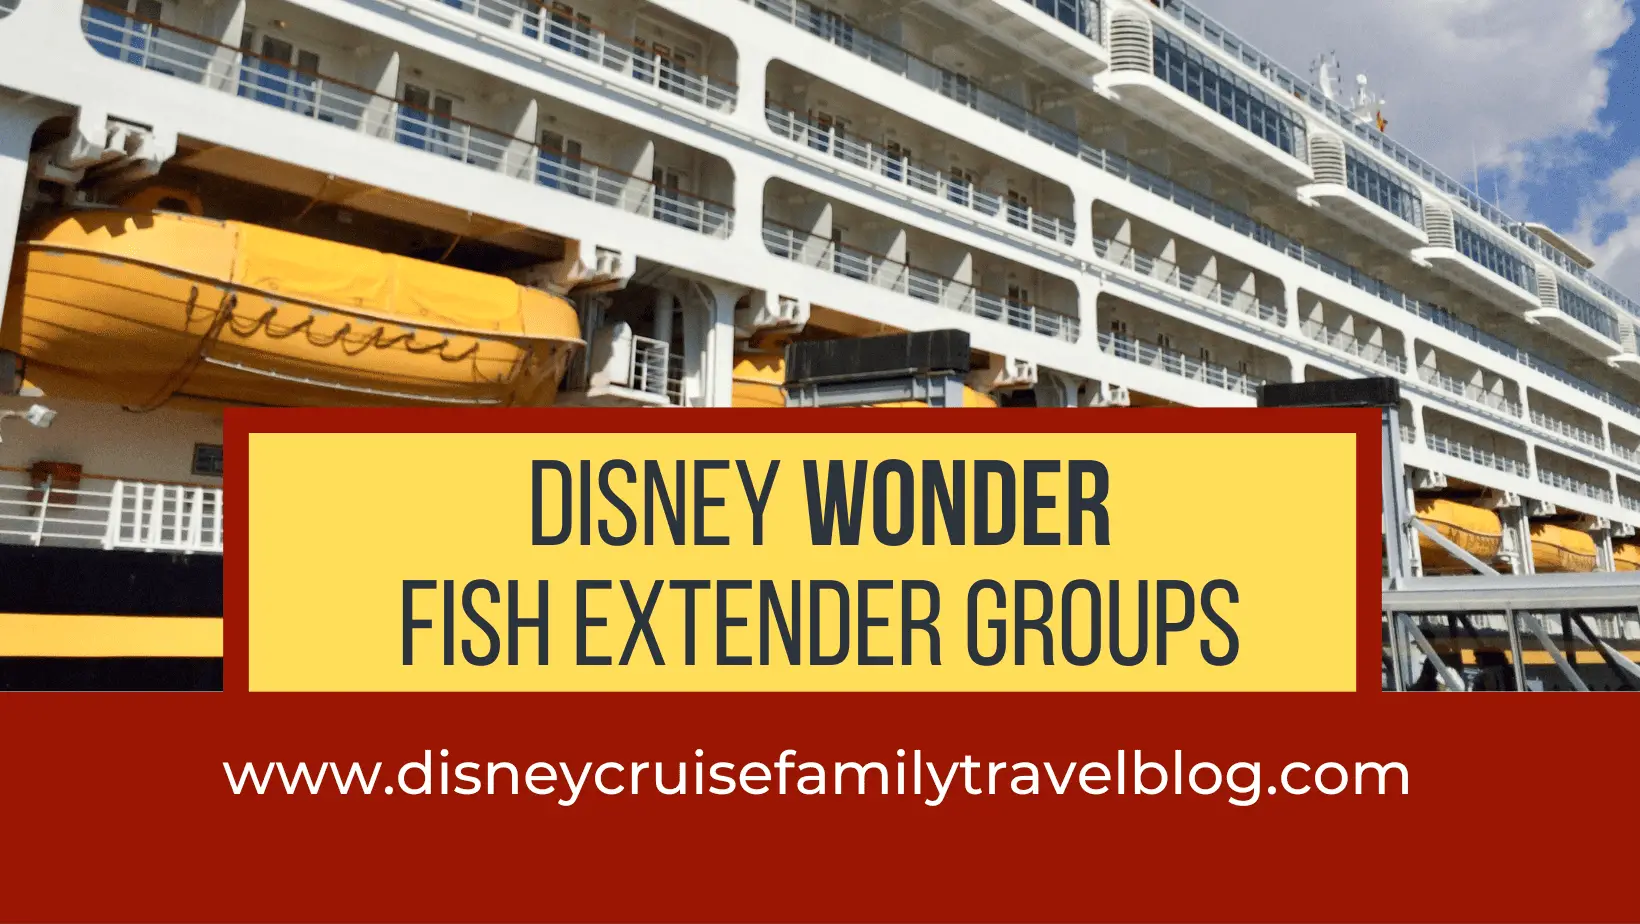 Disney Wonder's Fish Extender Groups - The Disney Cruise Family